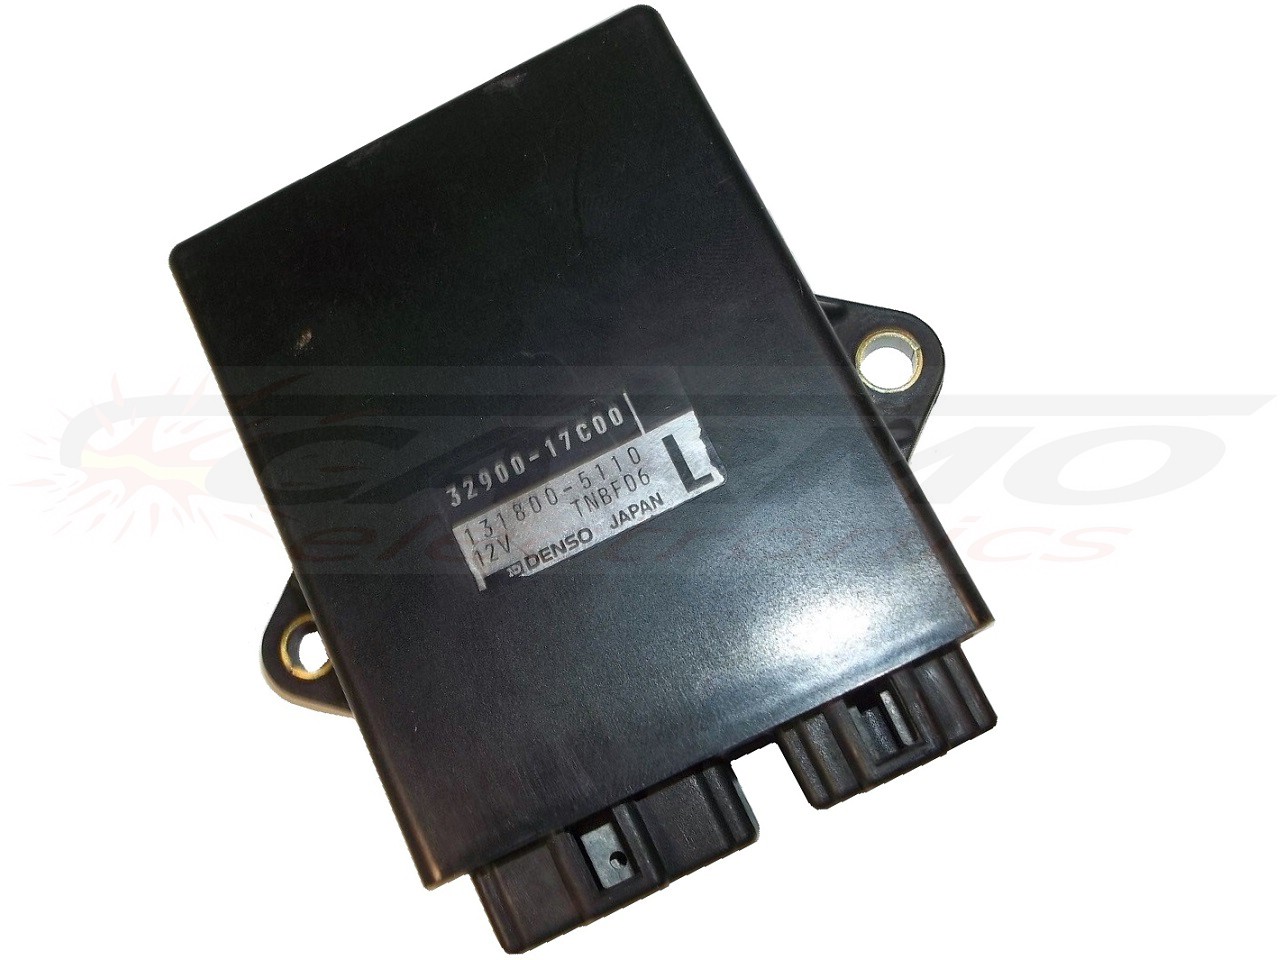 GSXR750 GSX-R750 igniter ignition module CDI TCI Box (32900-17C00, 32900-17C10)